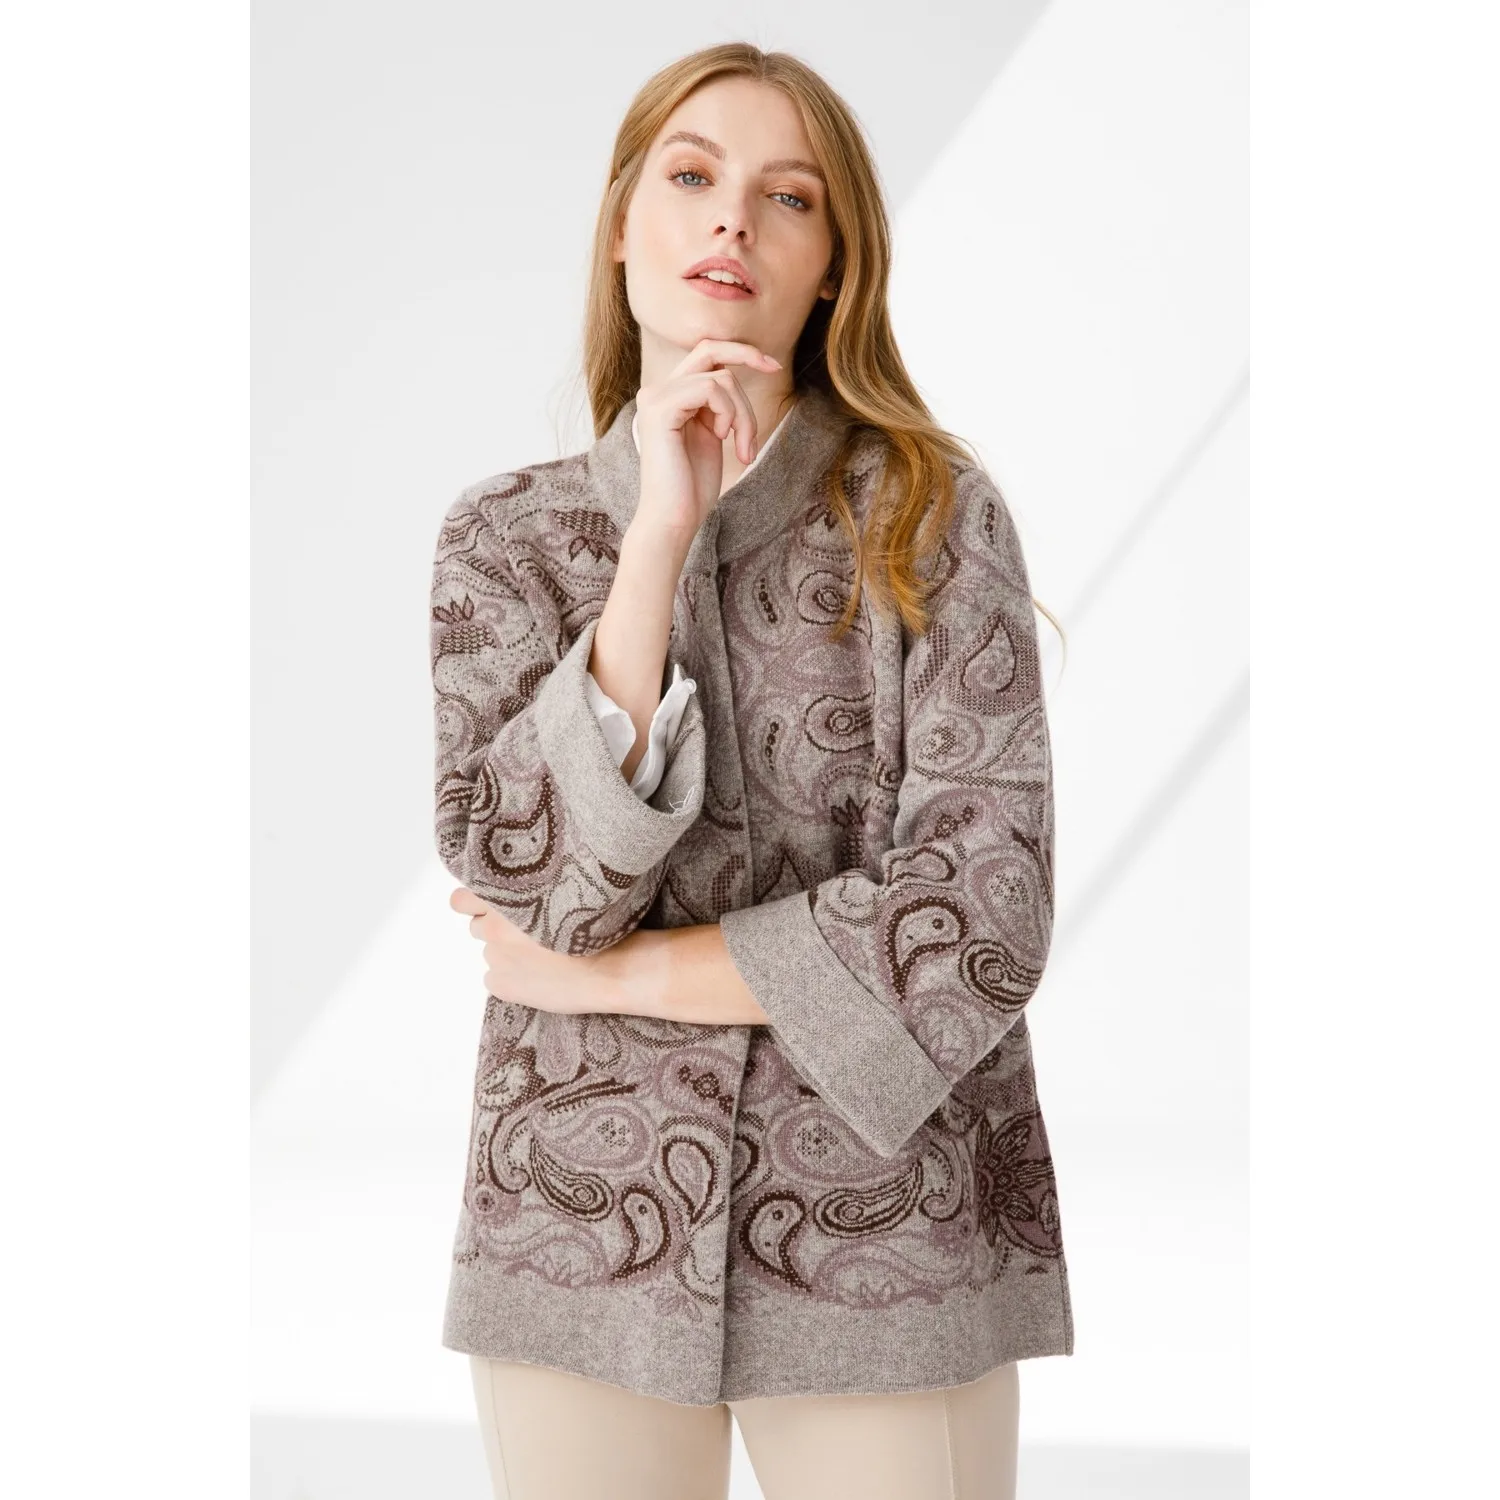 Patterned Knitwear Women Shawl Pattern Short Mink Color Coat Modern Design Noble Stance Enjoyable And Comfortable Use